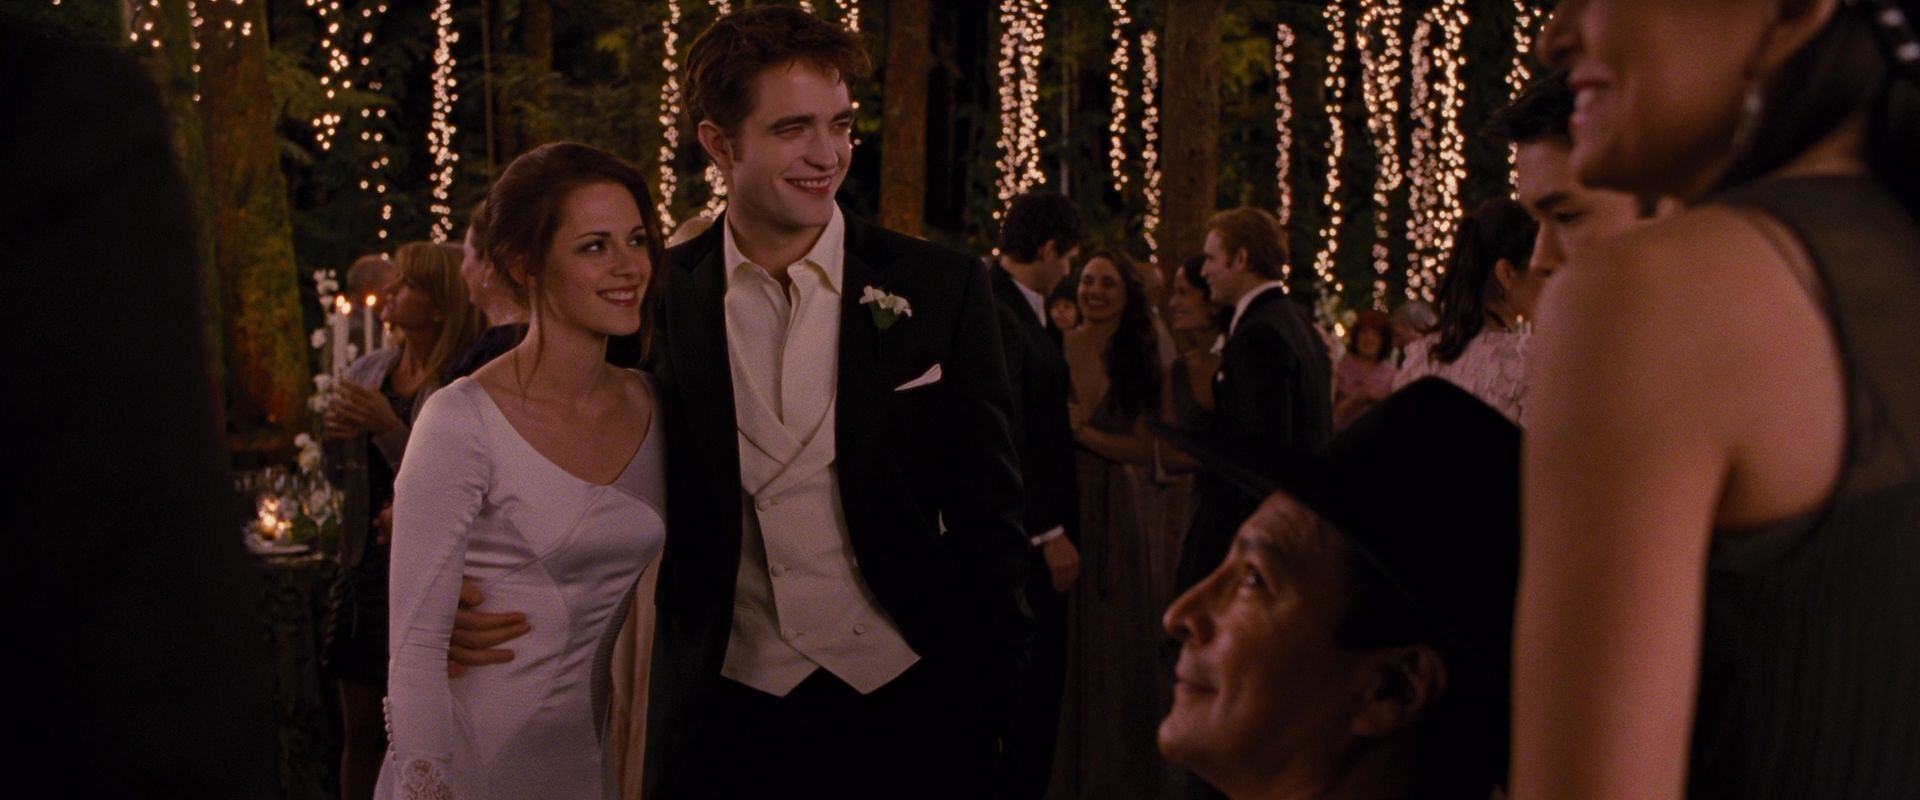 Edward and Bella's wedding breaking dawn 2 Wallpaper